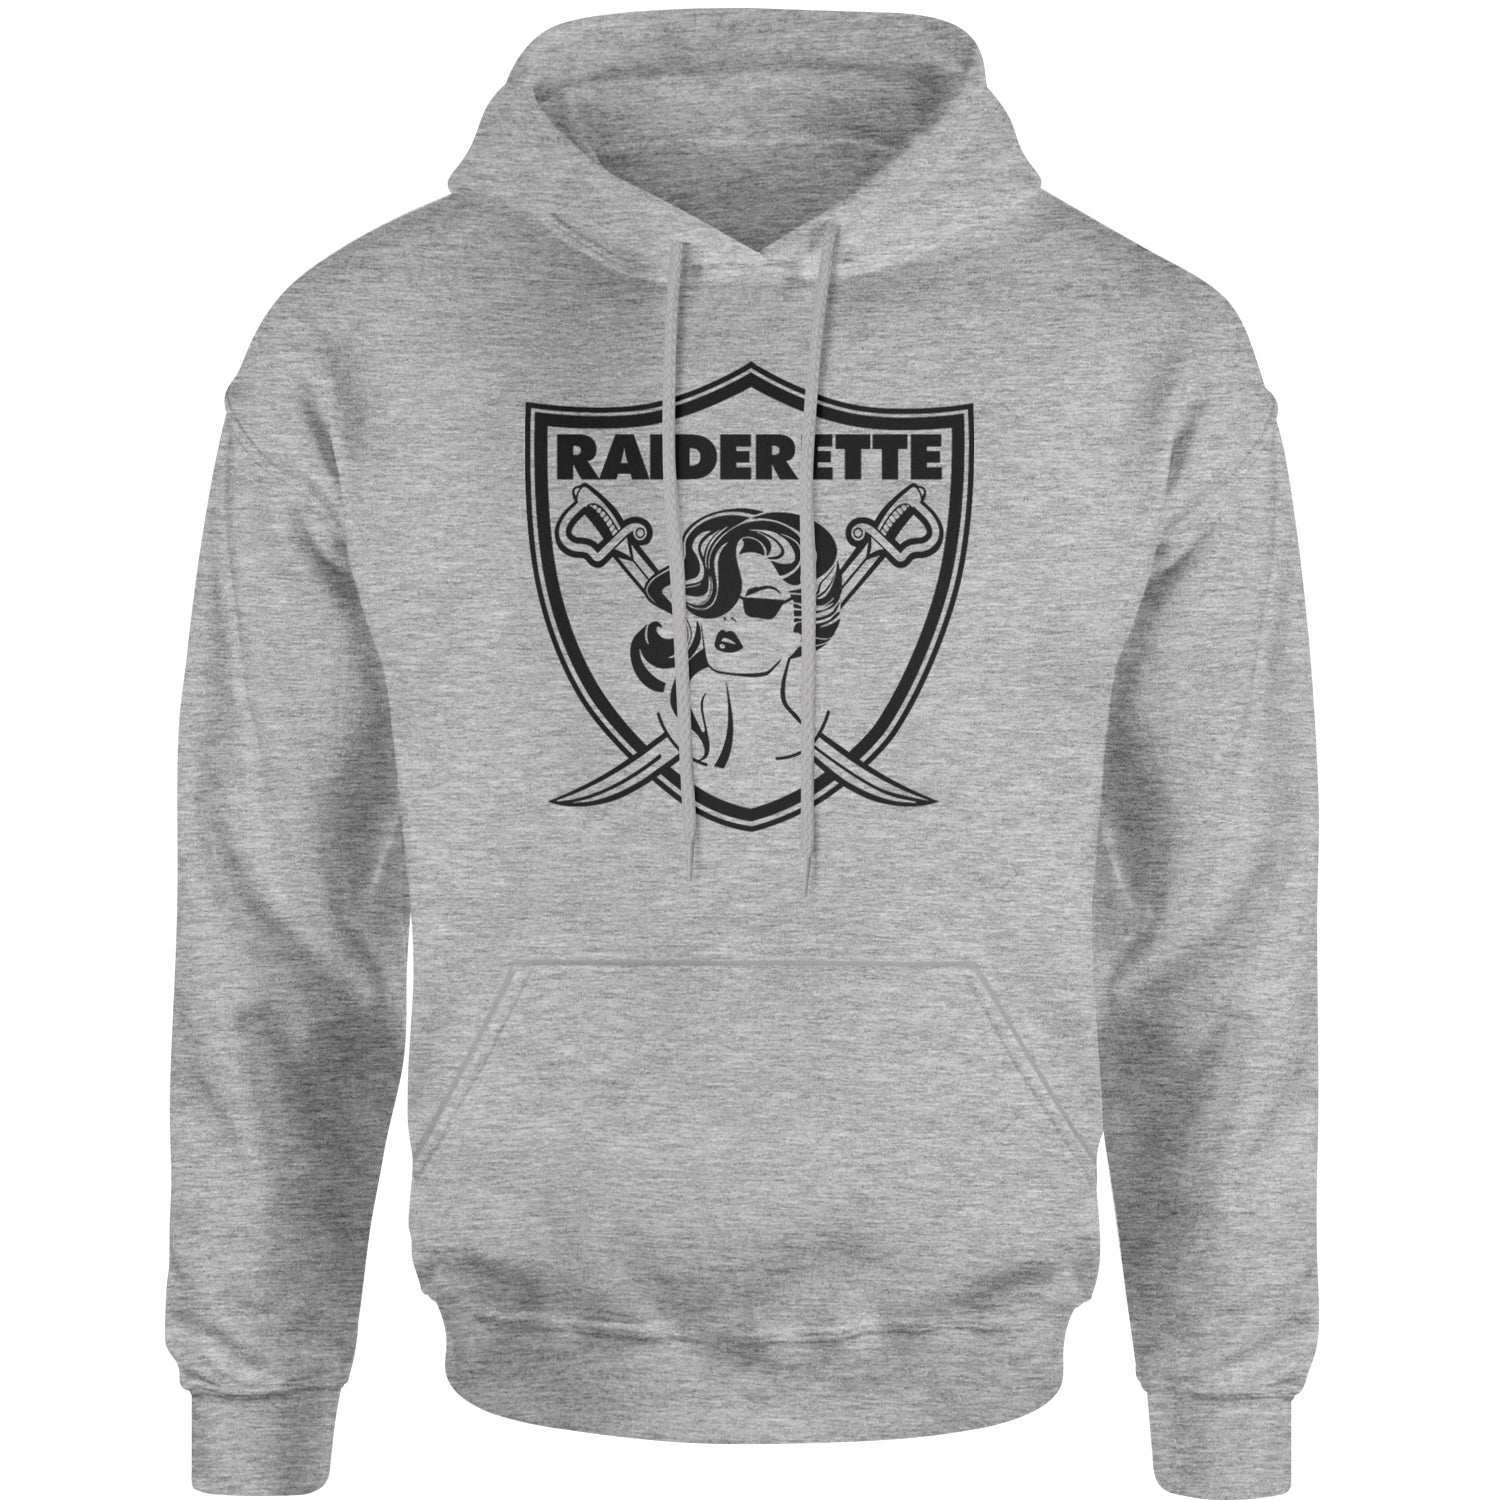 Raiderette Football Gameday Ready Adult Hoodie Sweatshirt